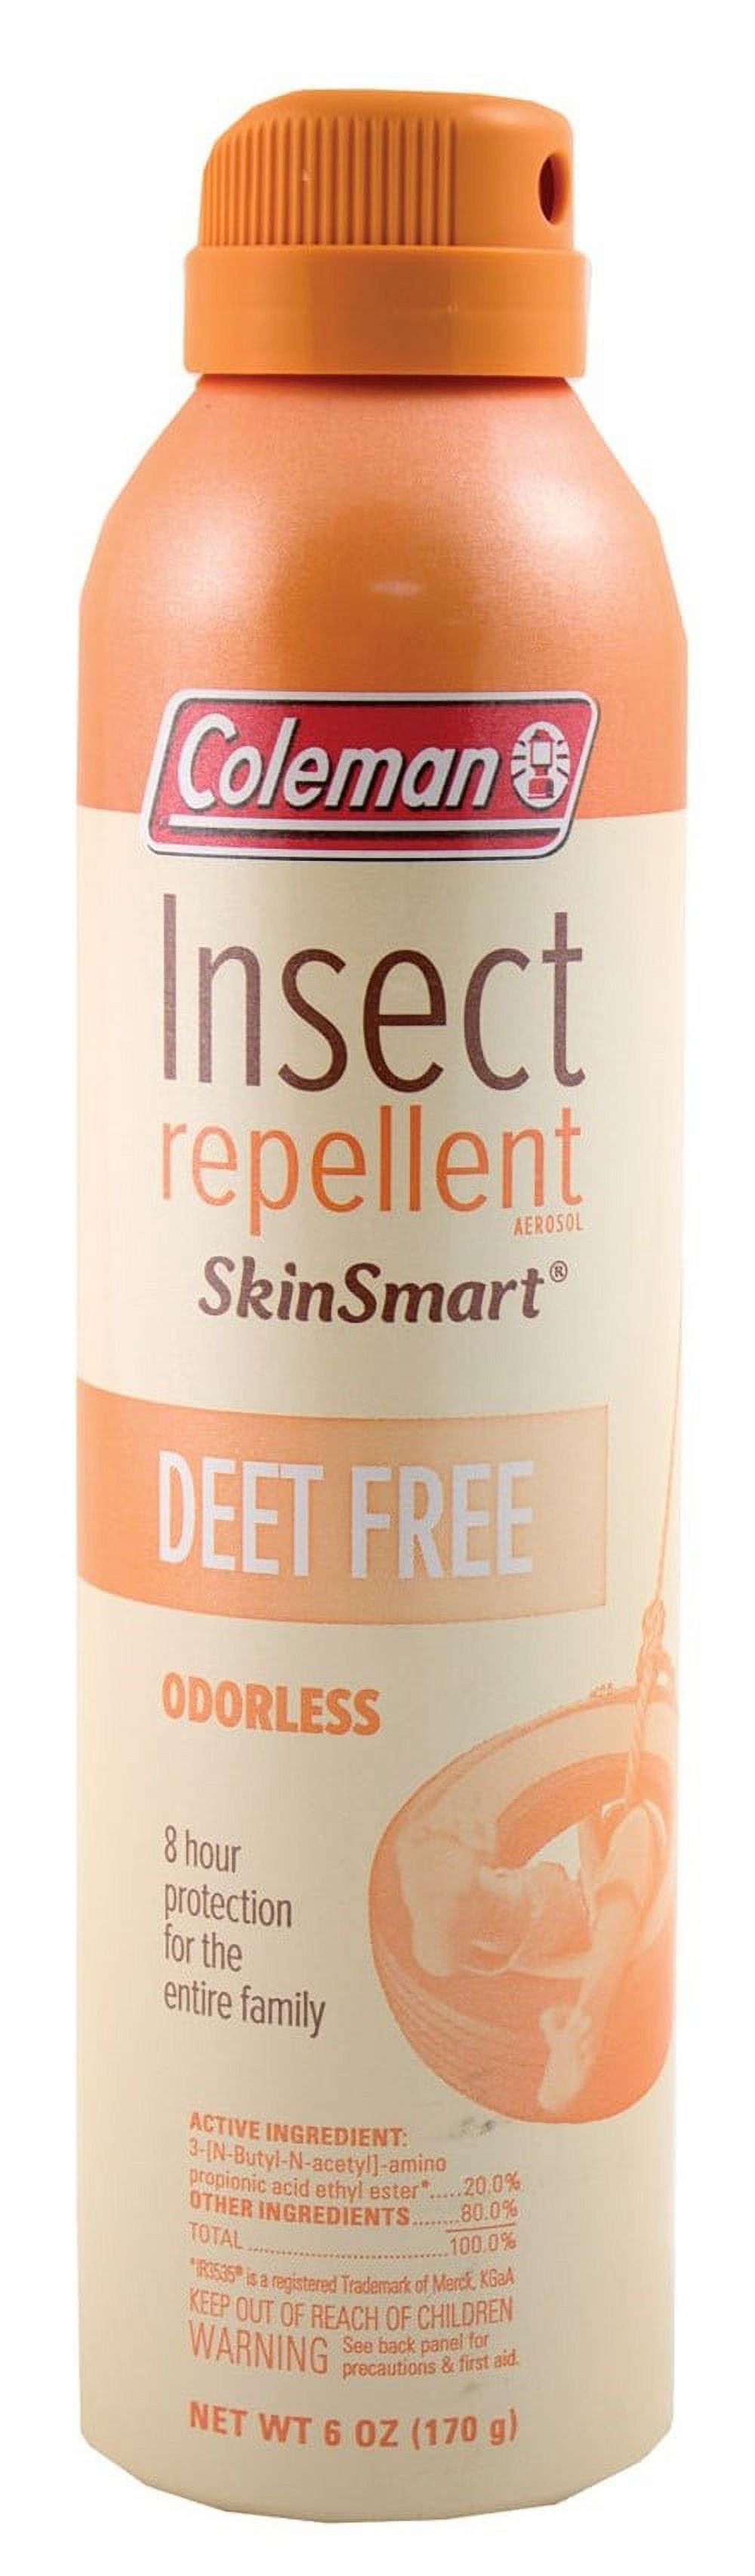 Coleman Deet-Free Skin Smart Insect Repellent, 6 oz - image 2 of 3